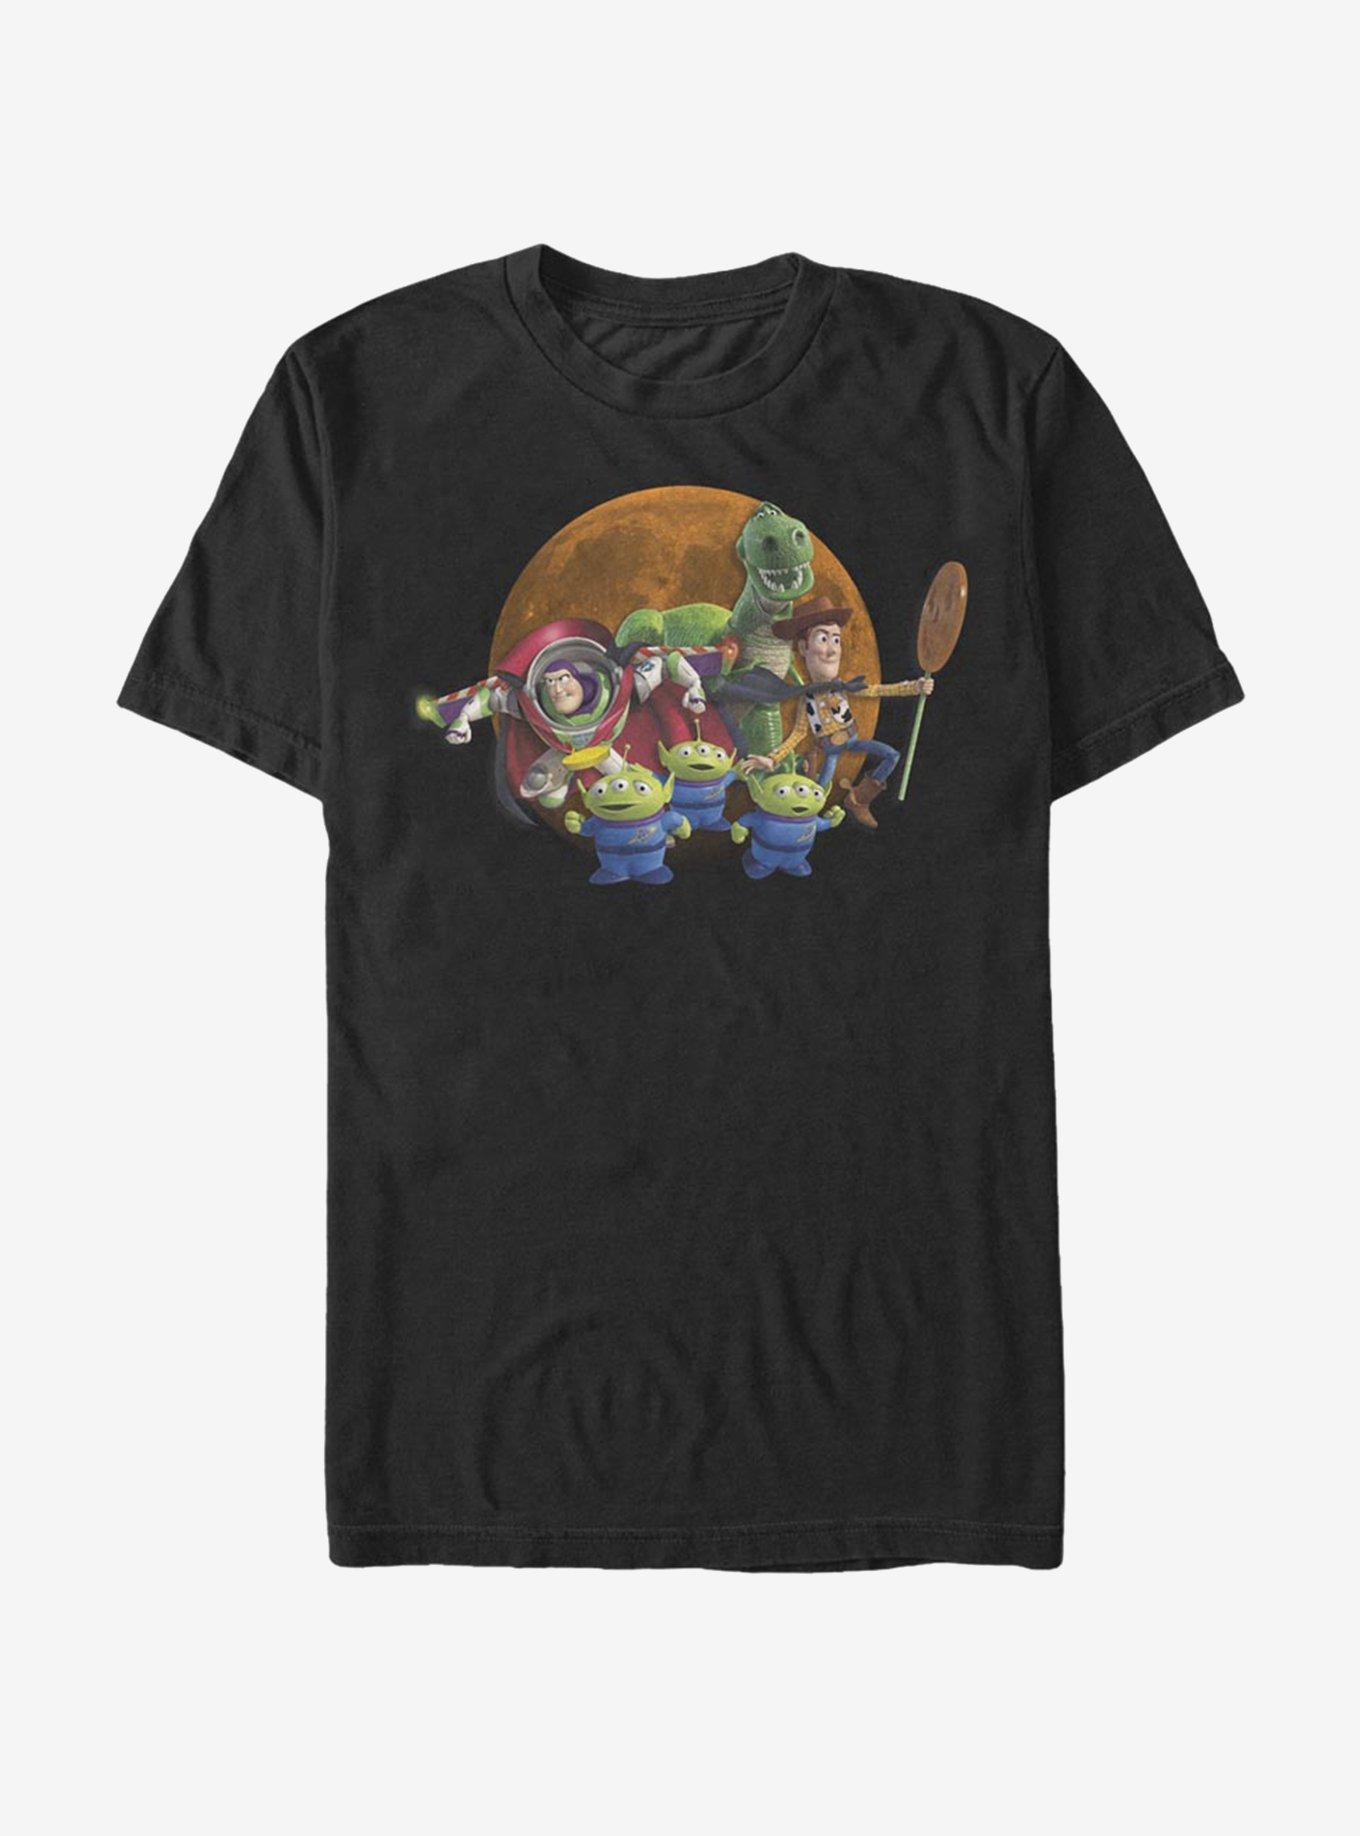 Disney Pixar Toy Story Toystory Halloween T-Shirt